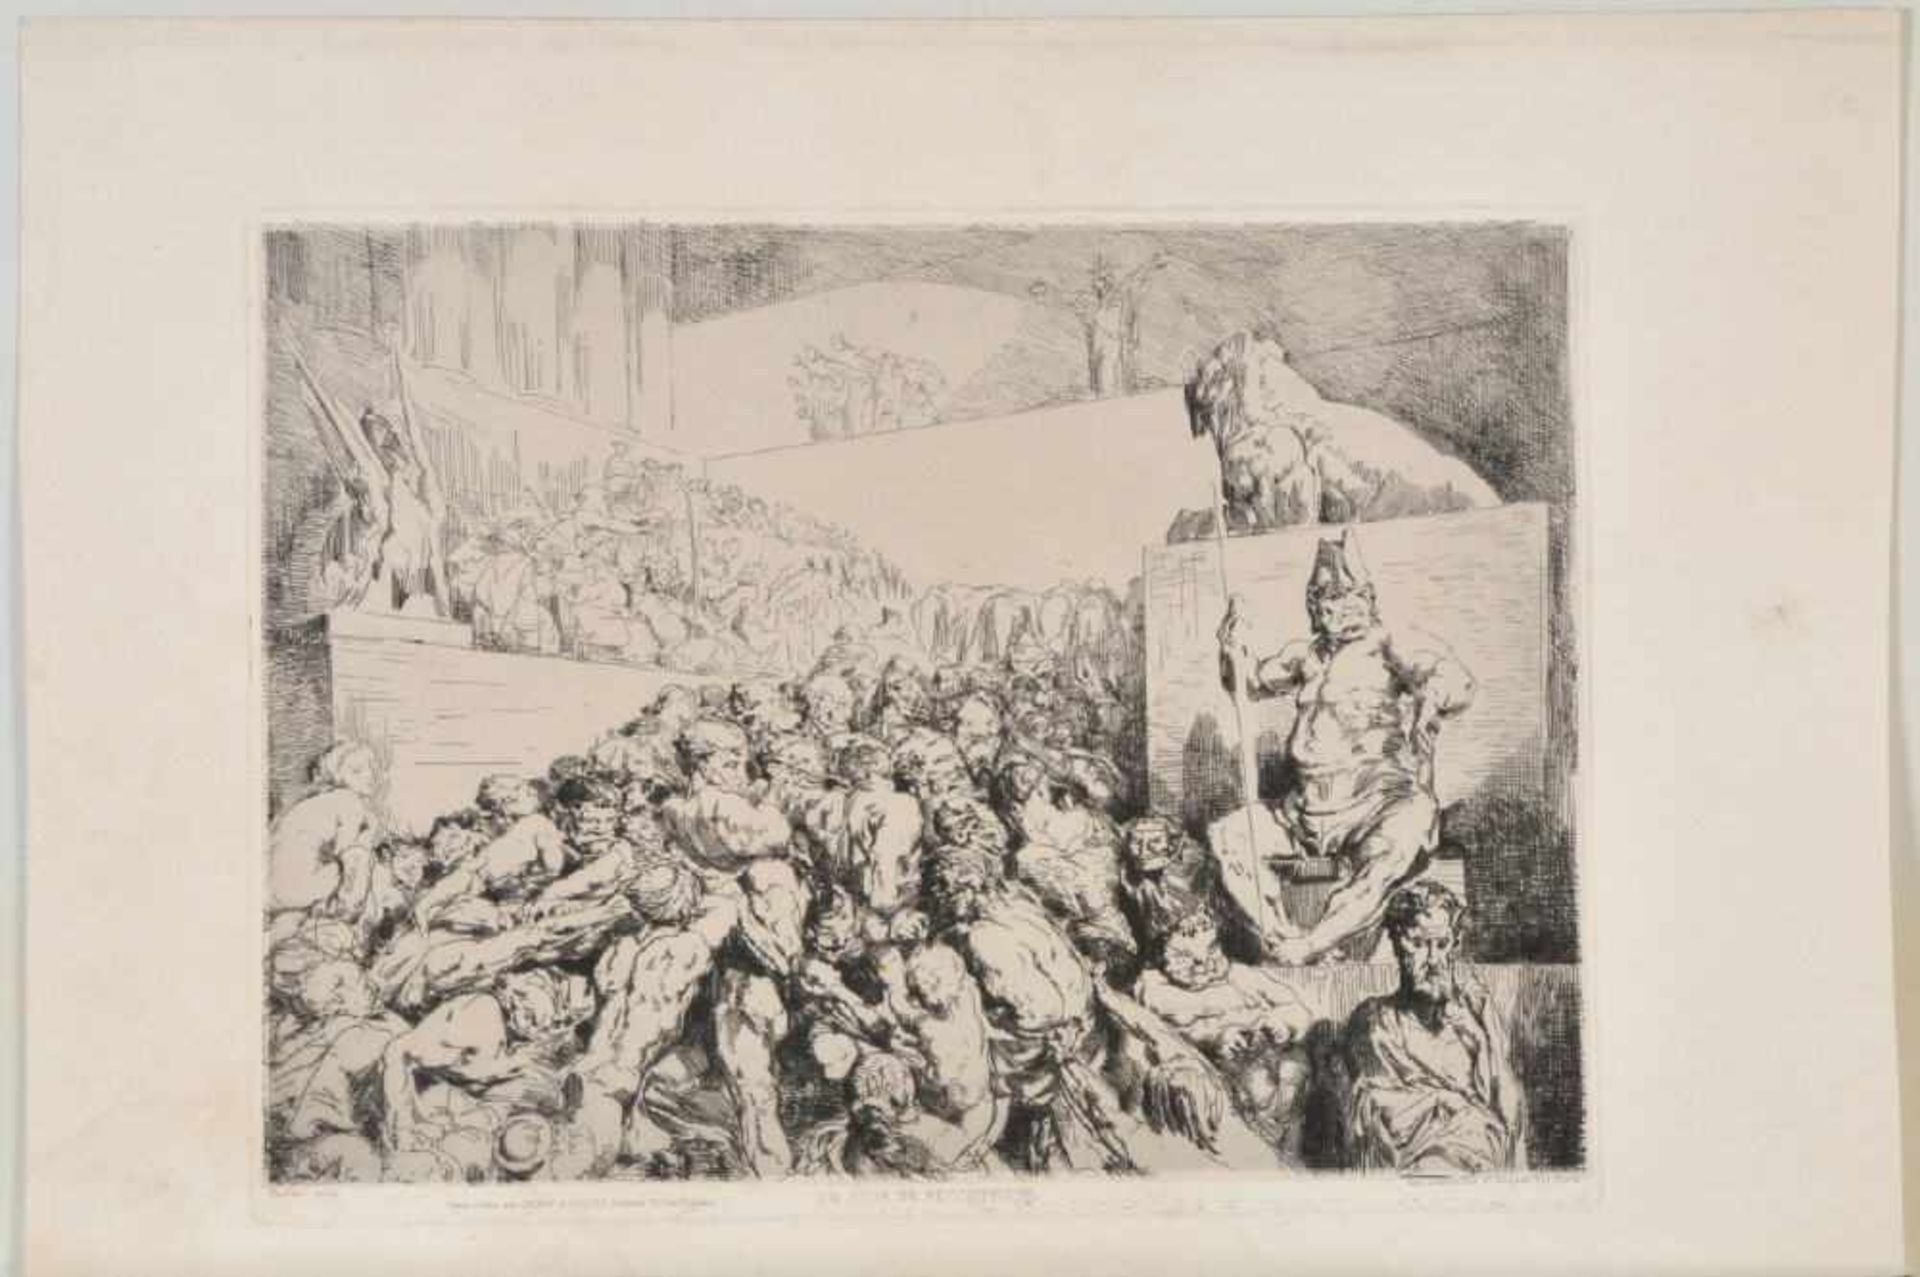 Chifflart, Francois Nicolas, 1825 St-Omer - 1901 ParisRadierung, 23 x 31,5 cm, betit. " Un jours